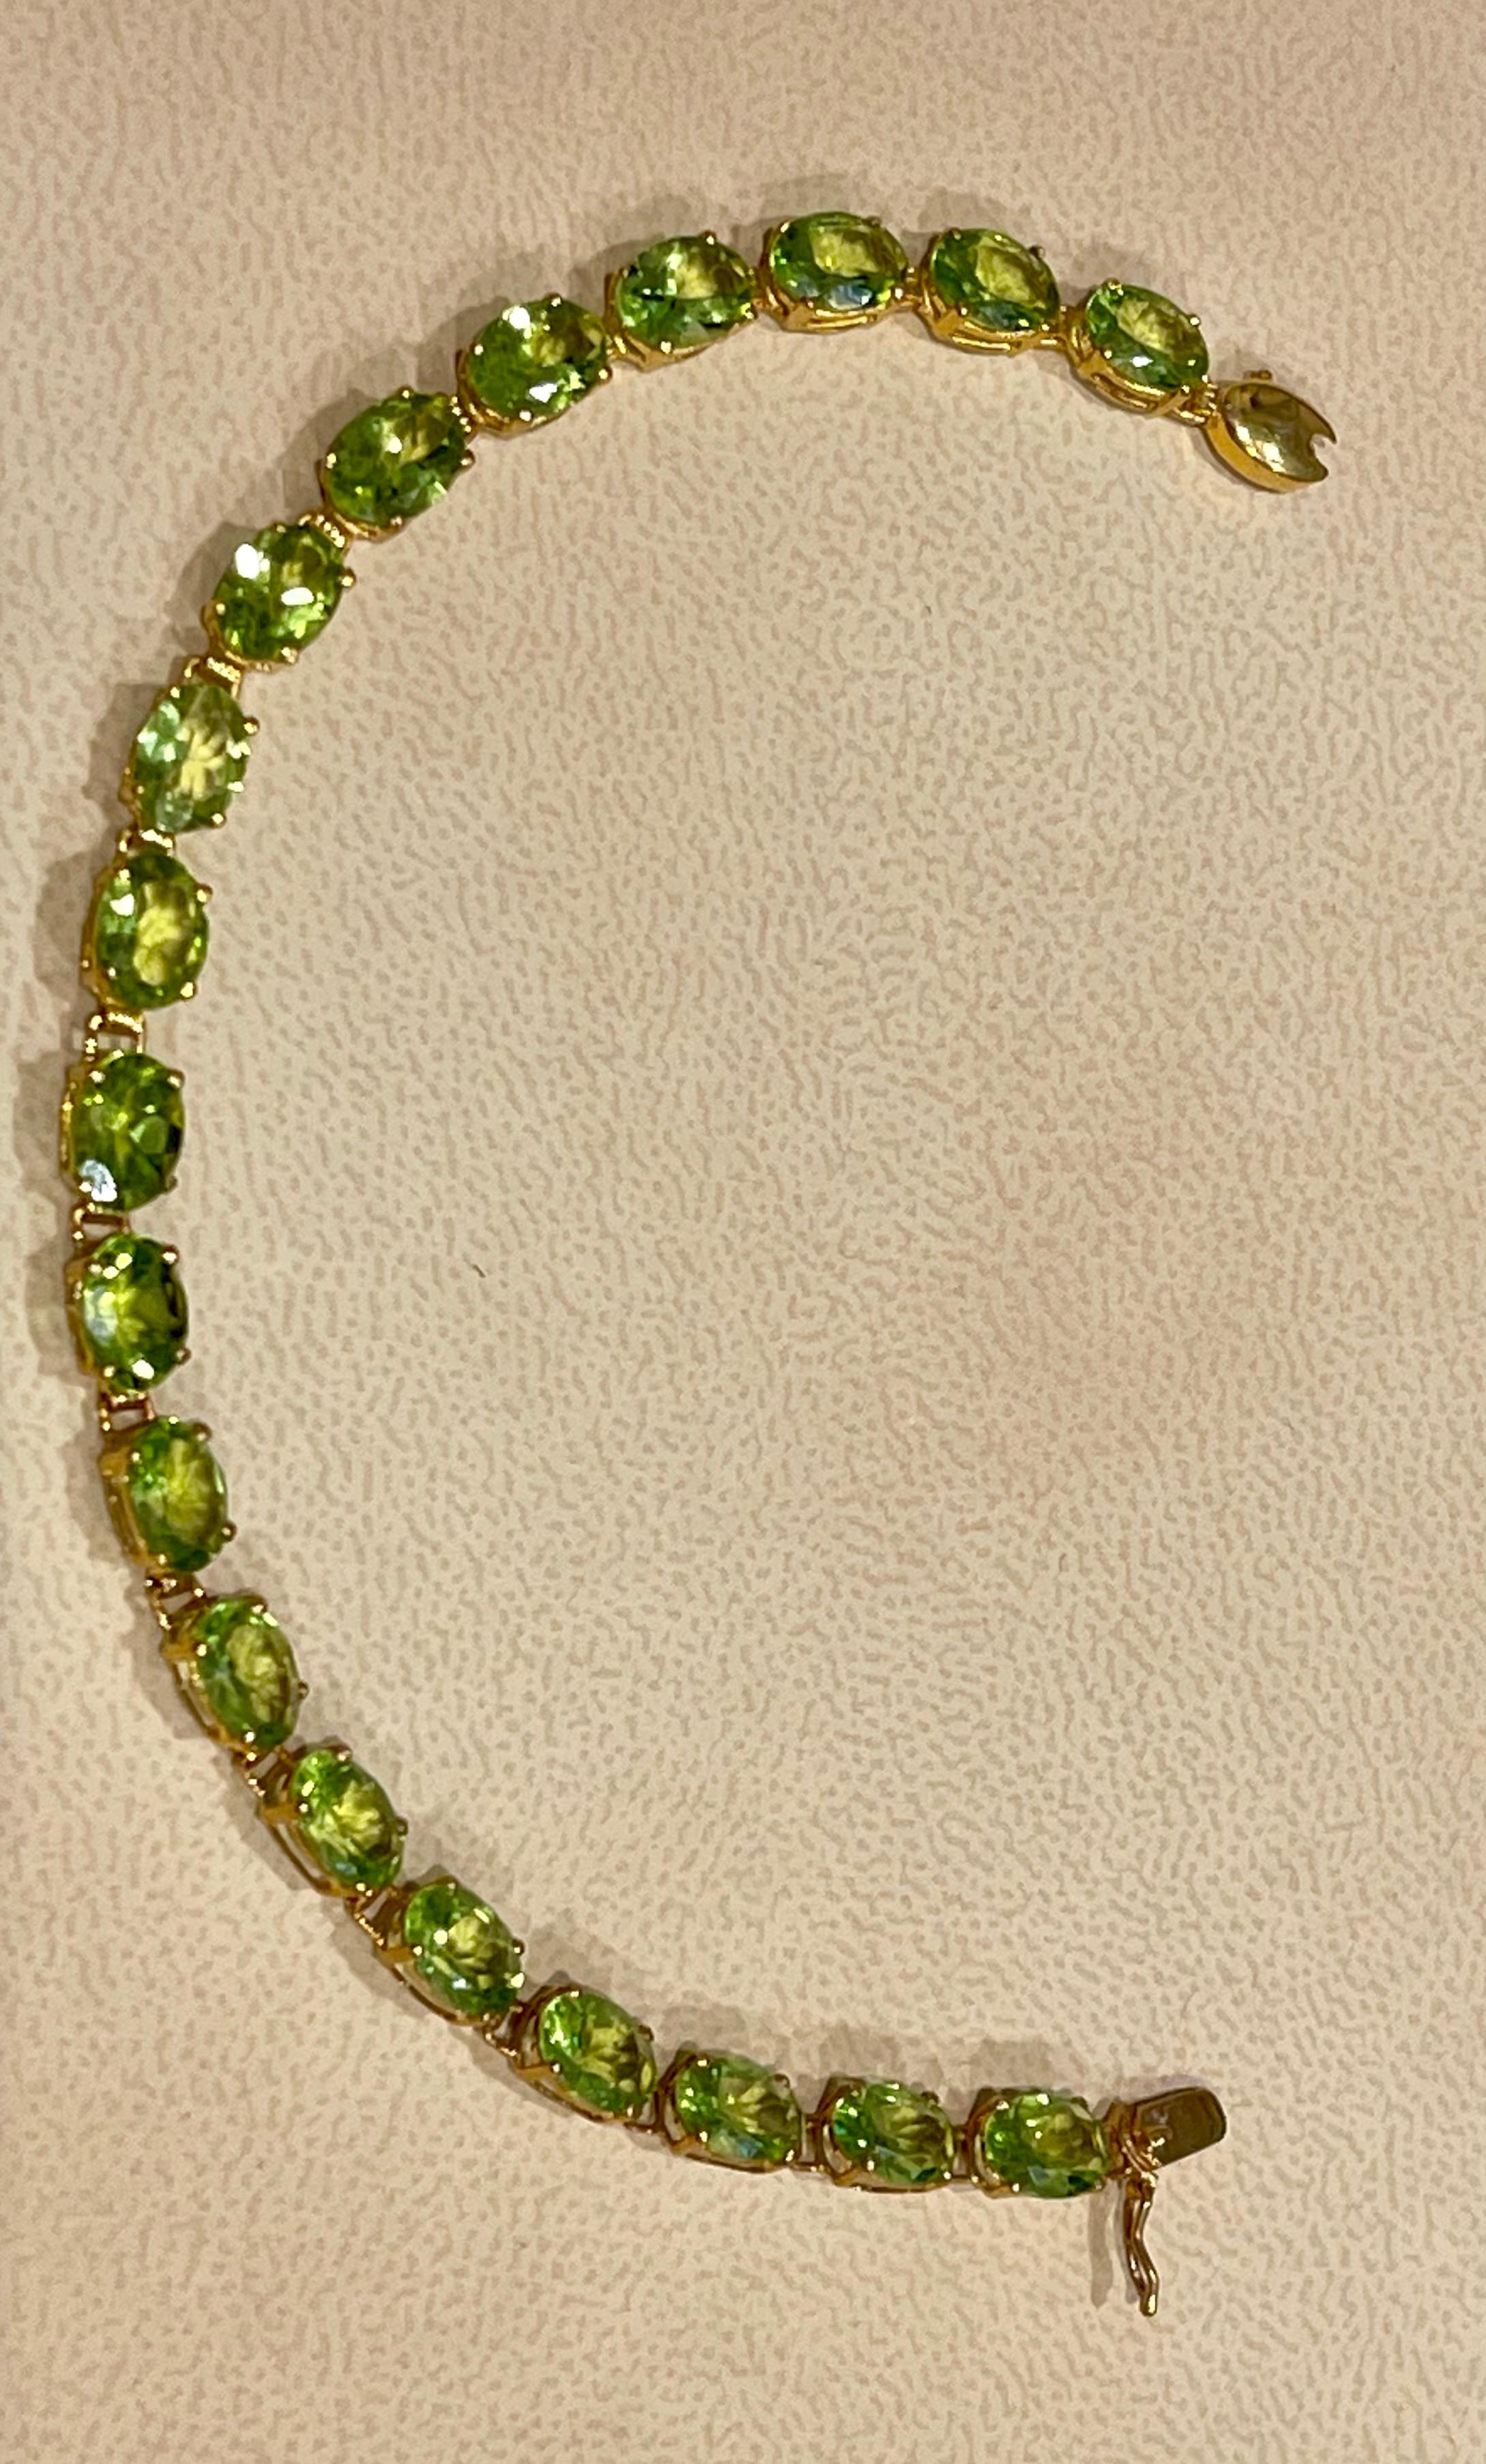 Oval Cut 15 Carat Genuine Natural Pear Shape Peridot Tennis Bracelet 14 Karat White Gold For Sale